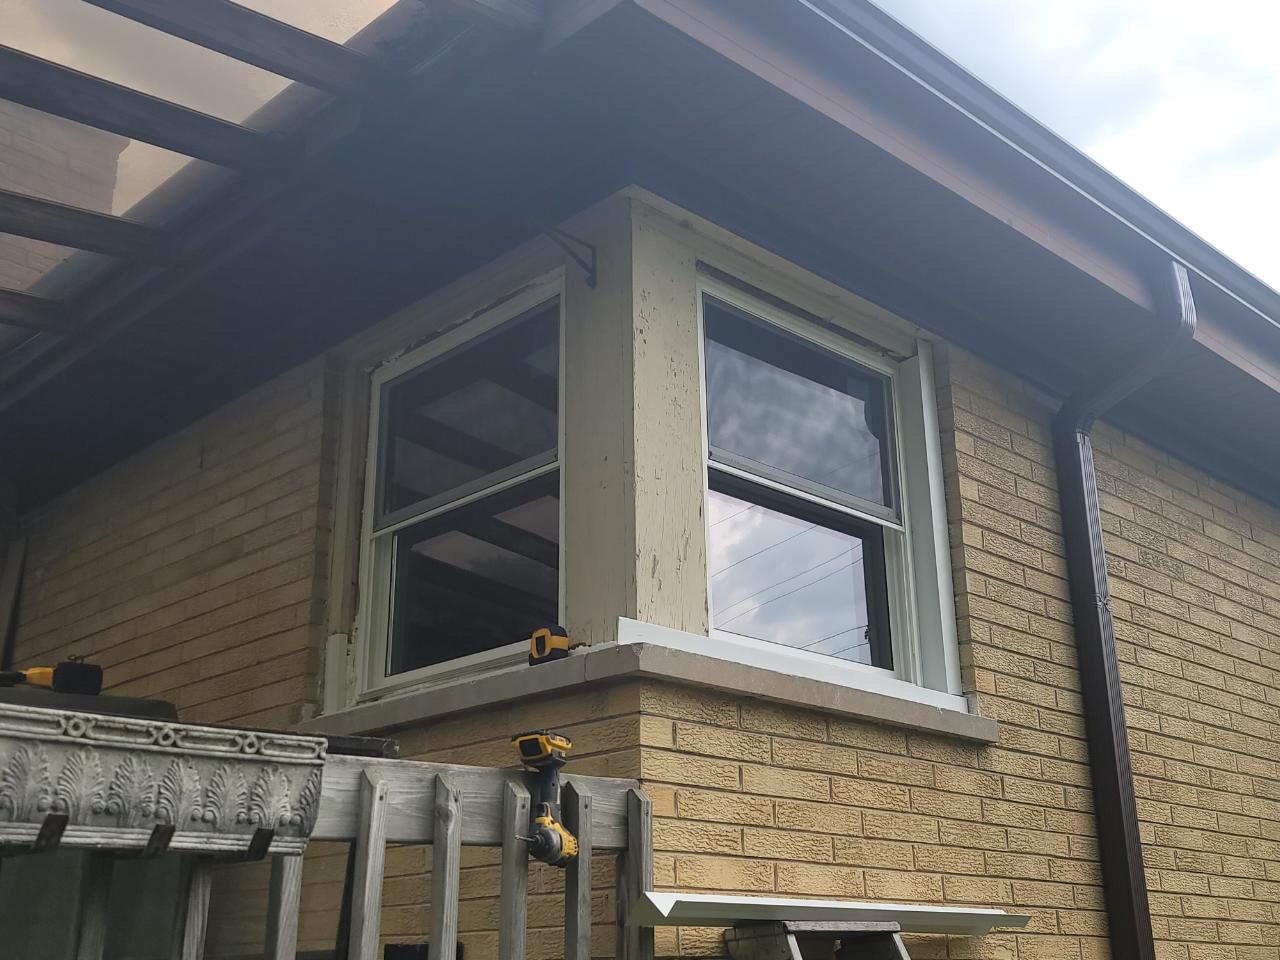 Two windows undergo renovations.